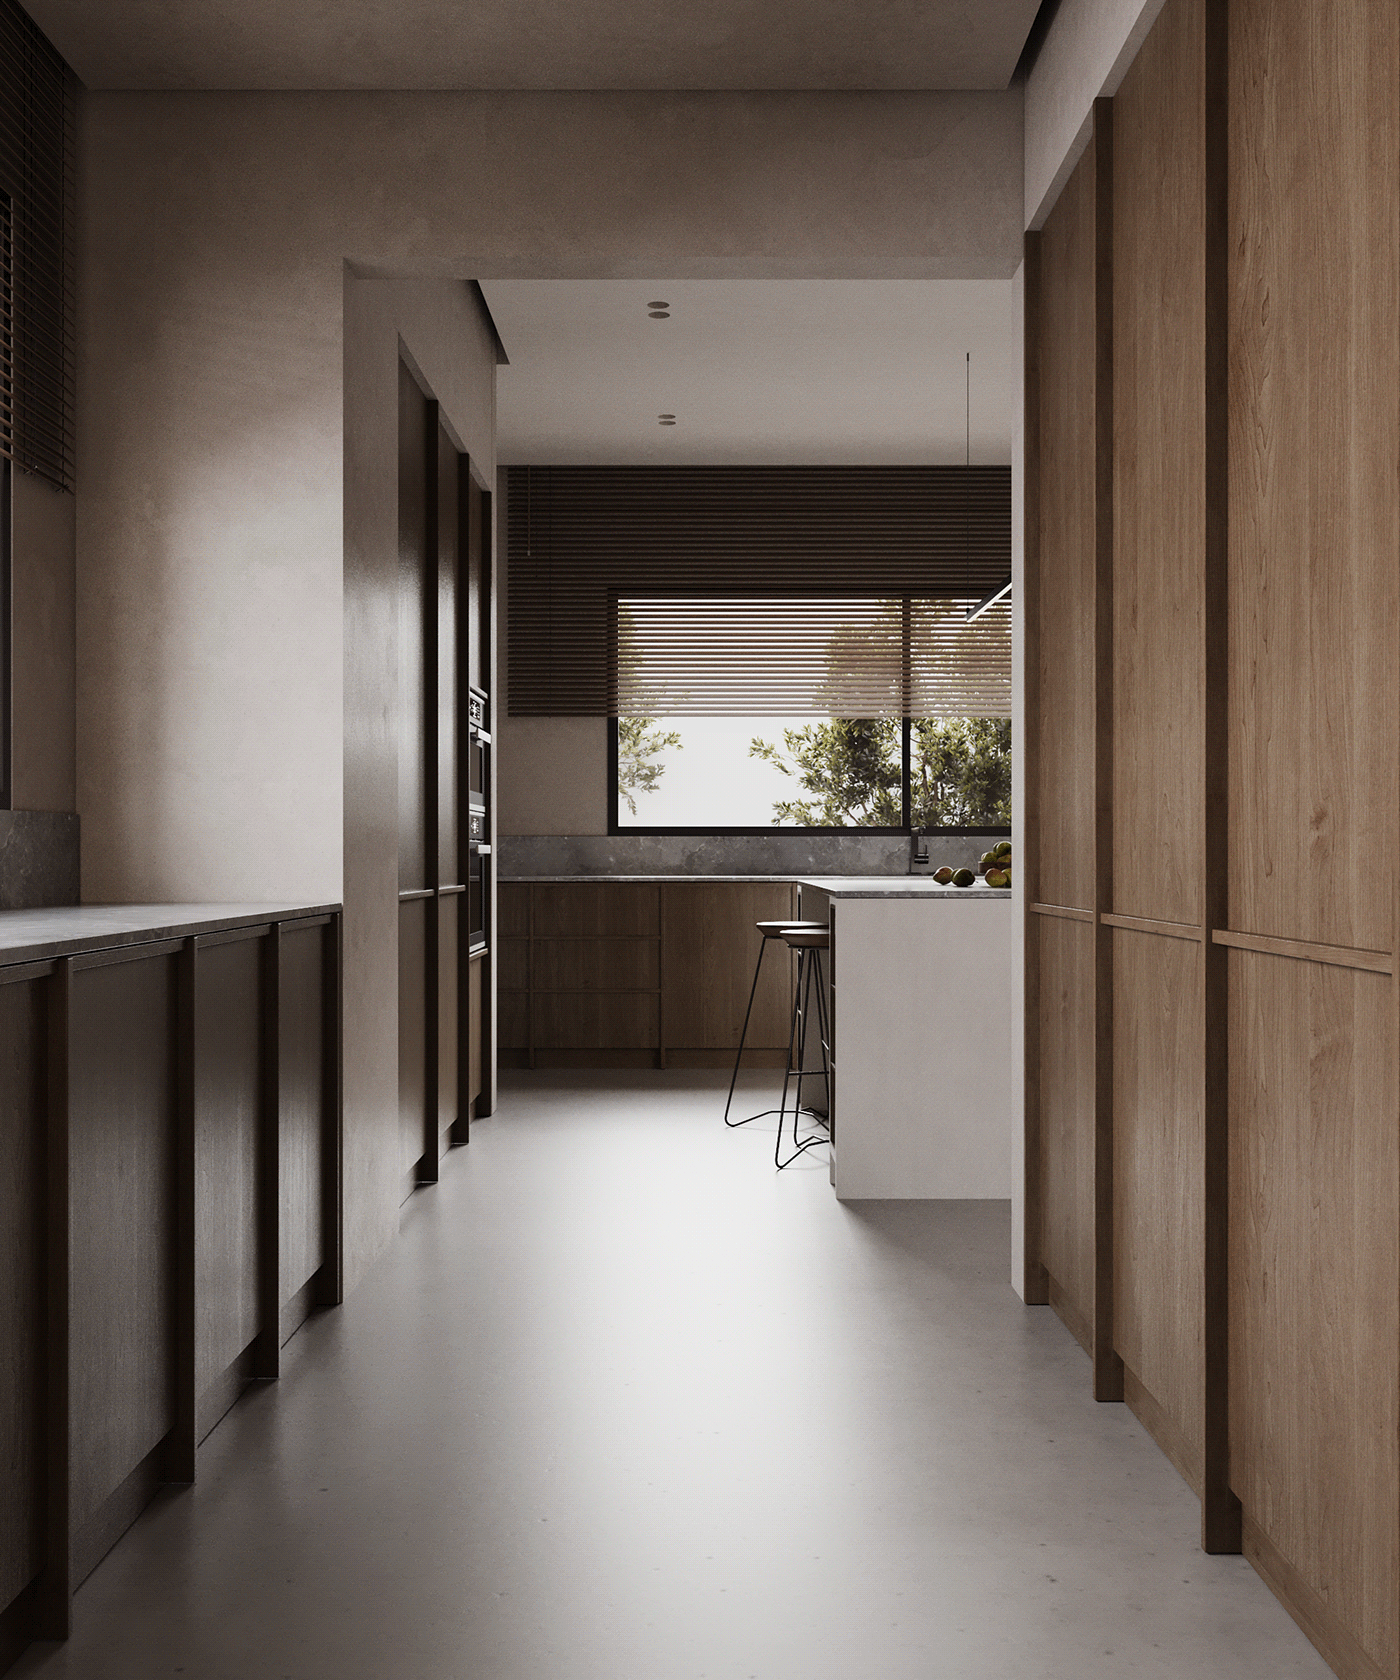 3ds max corona render  design Interior interior design  kitchen kitchen design Pantry Render rendering